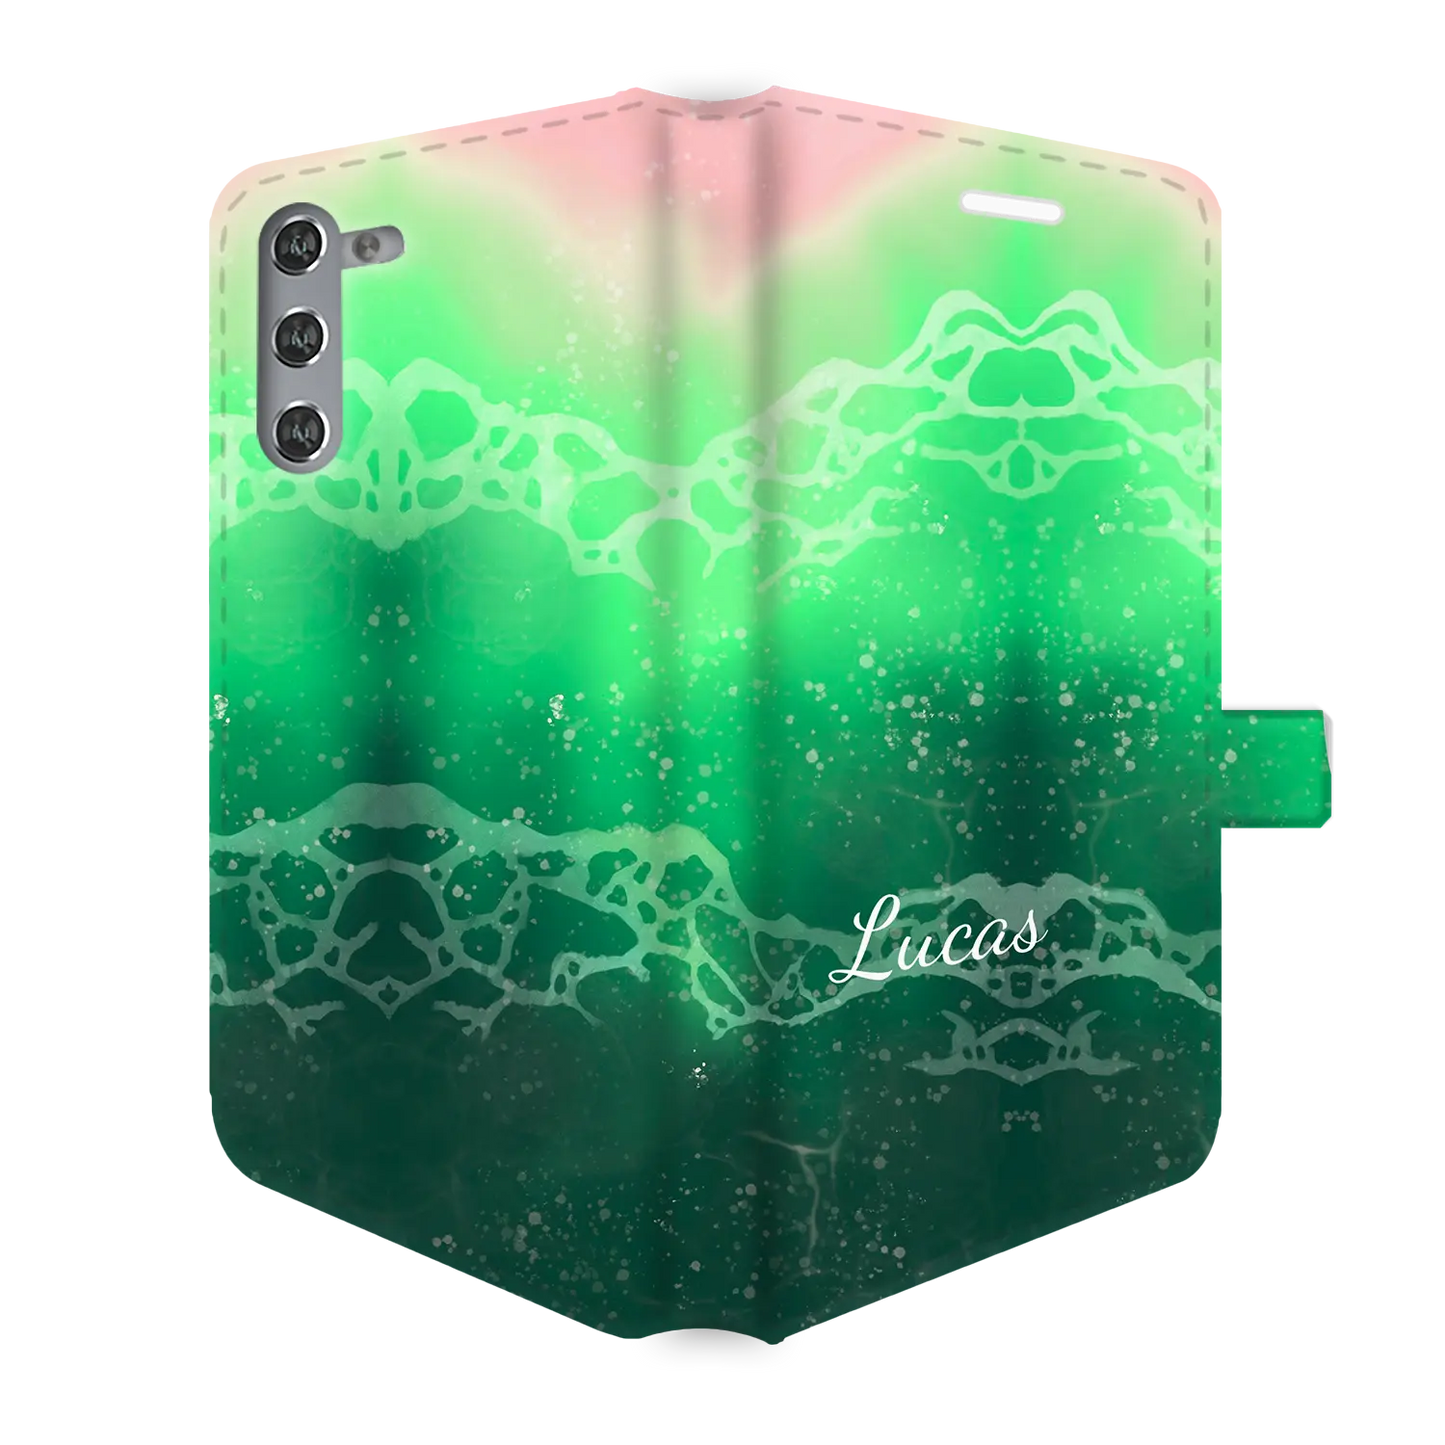 Sea Foam - Custom Galaxy S Case